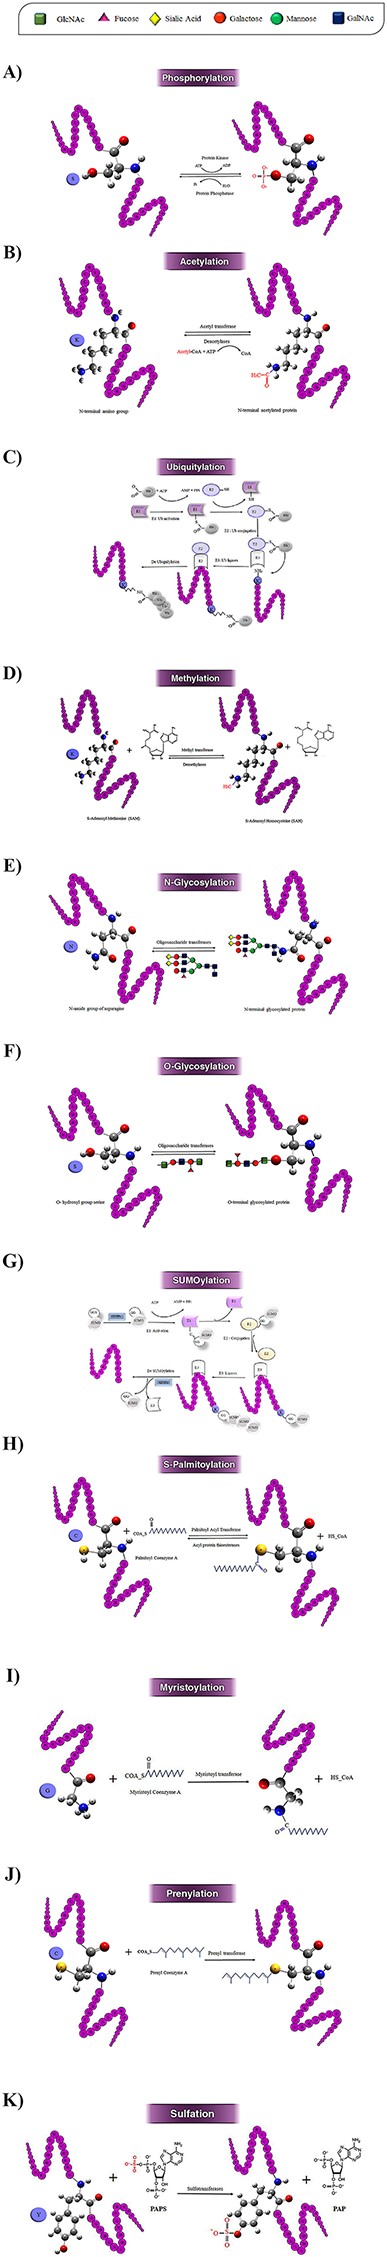 Schematic illustration of the 10 most studied PTMs including Phosphorylation (A), Acetylation (B), Ubiquitylation (C), Methylation (D), N-glycosylation (E), O-glycosylation (F), SUMOylation (G), S-palmitoylation (H), N-myristoylation (I), Prenylation (J), and Sulfation (k).